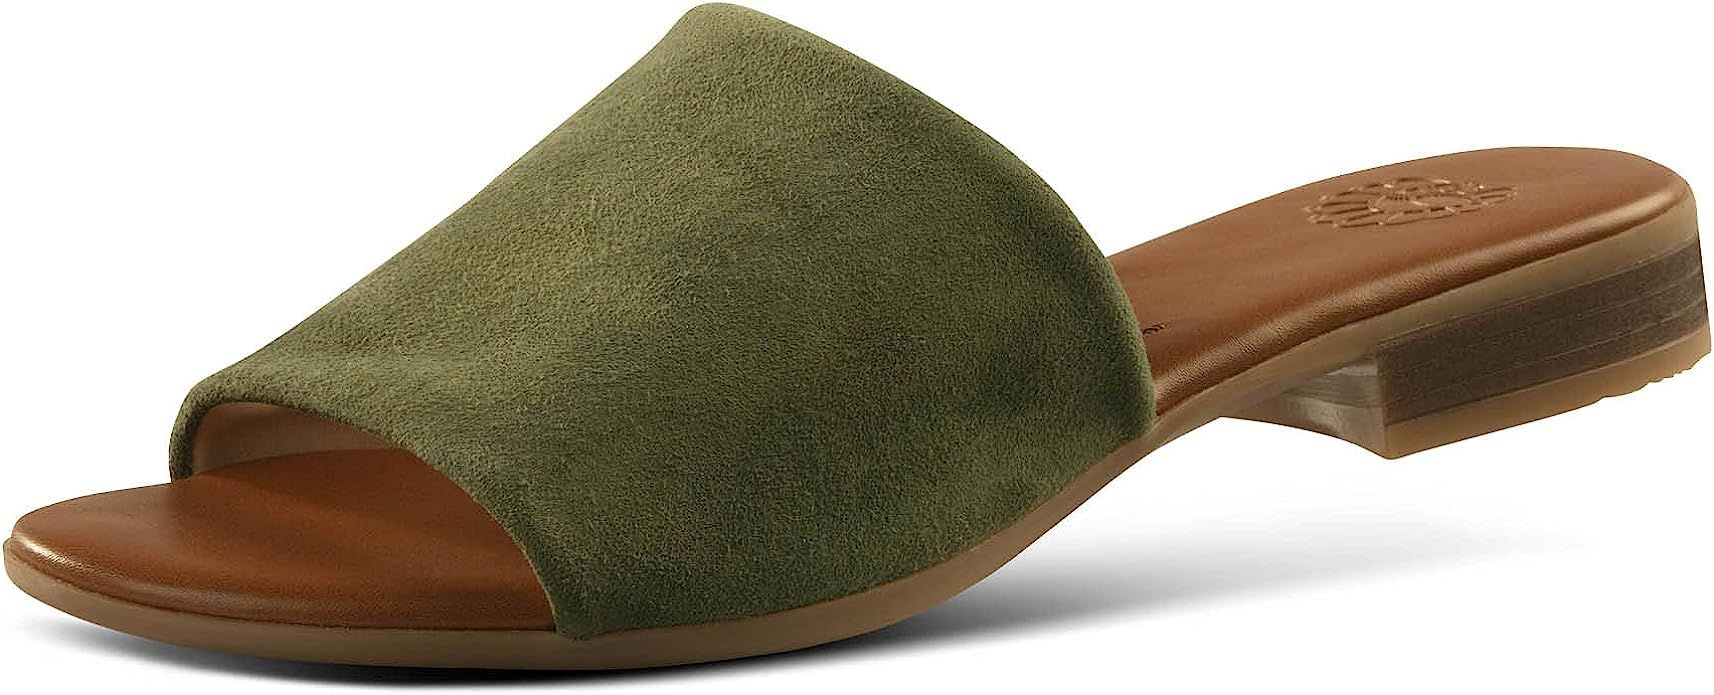 Jatarea Women’s Slide Sandal - Comfortable & Soft Premium Leather Slide Sandals - Simple Synthe... | Amazon (US)